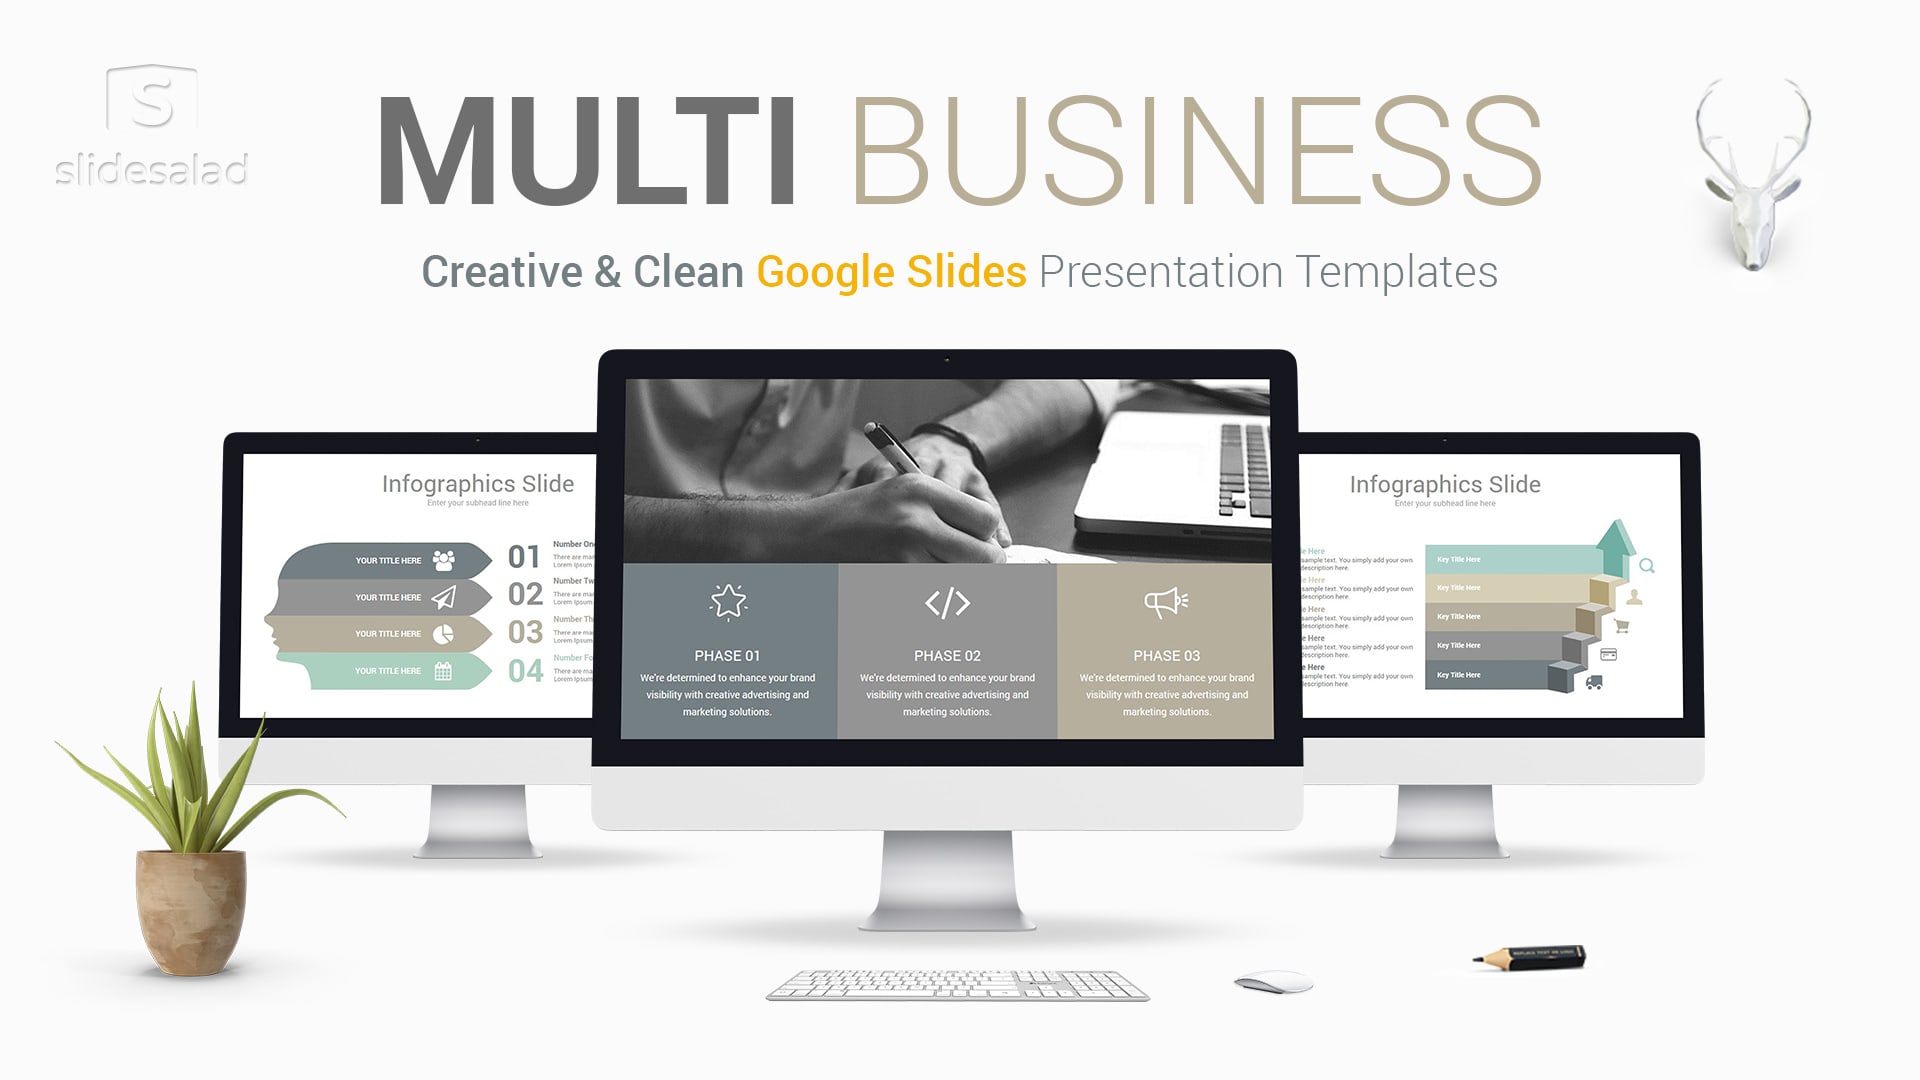 Multi Business Google Slides Presentation Template - The Best Creative Multipurpose Google Slides Theme